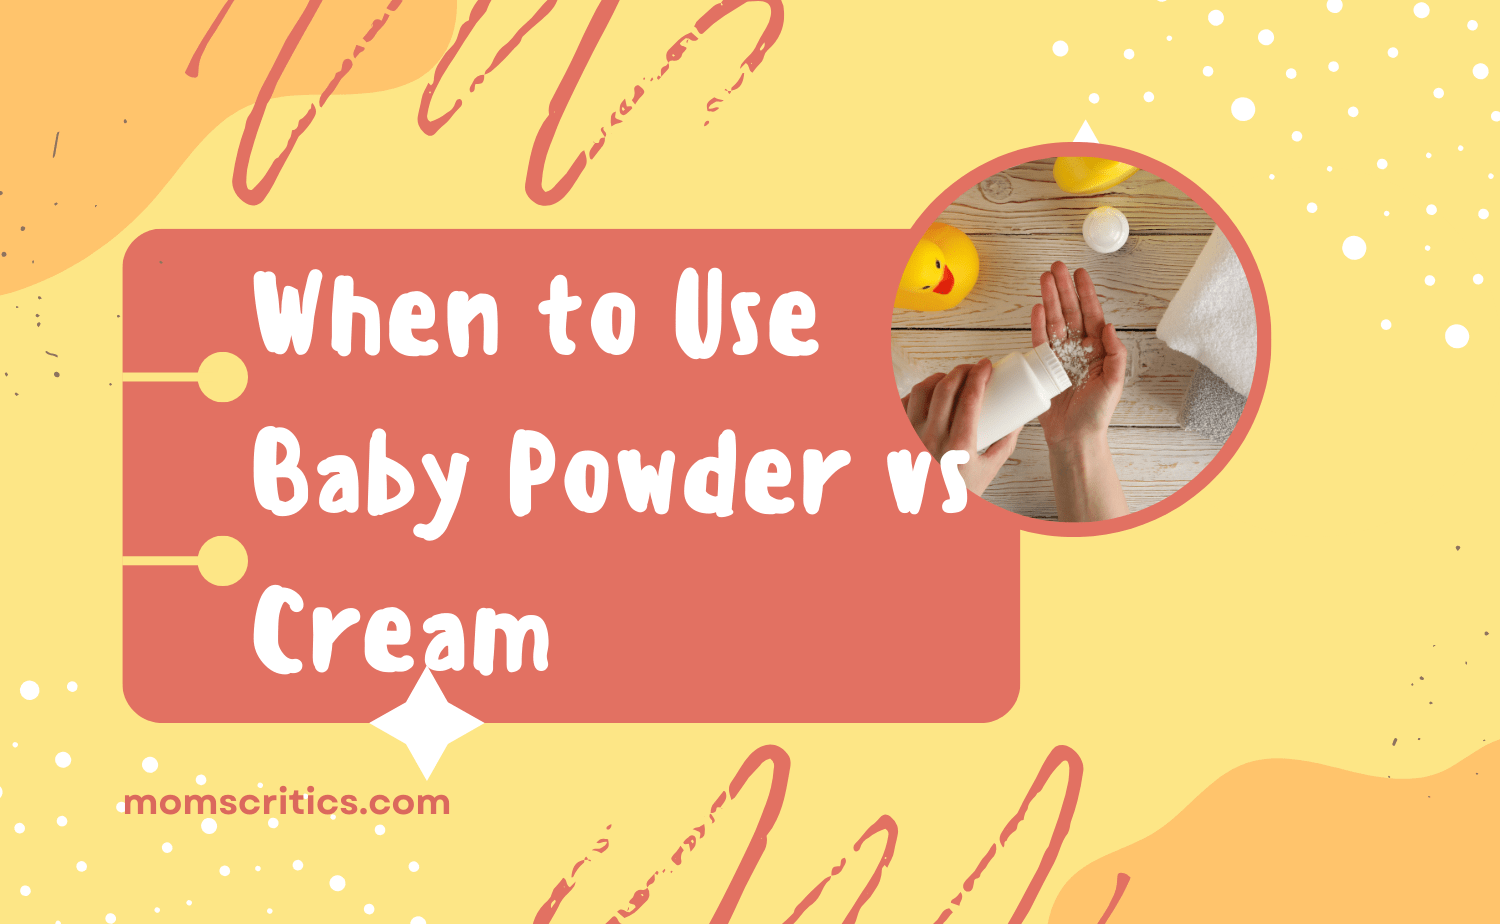 When to Use Baby Powder vs Cream